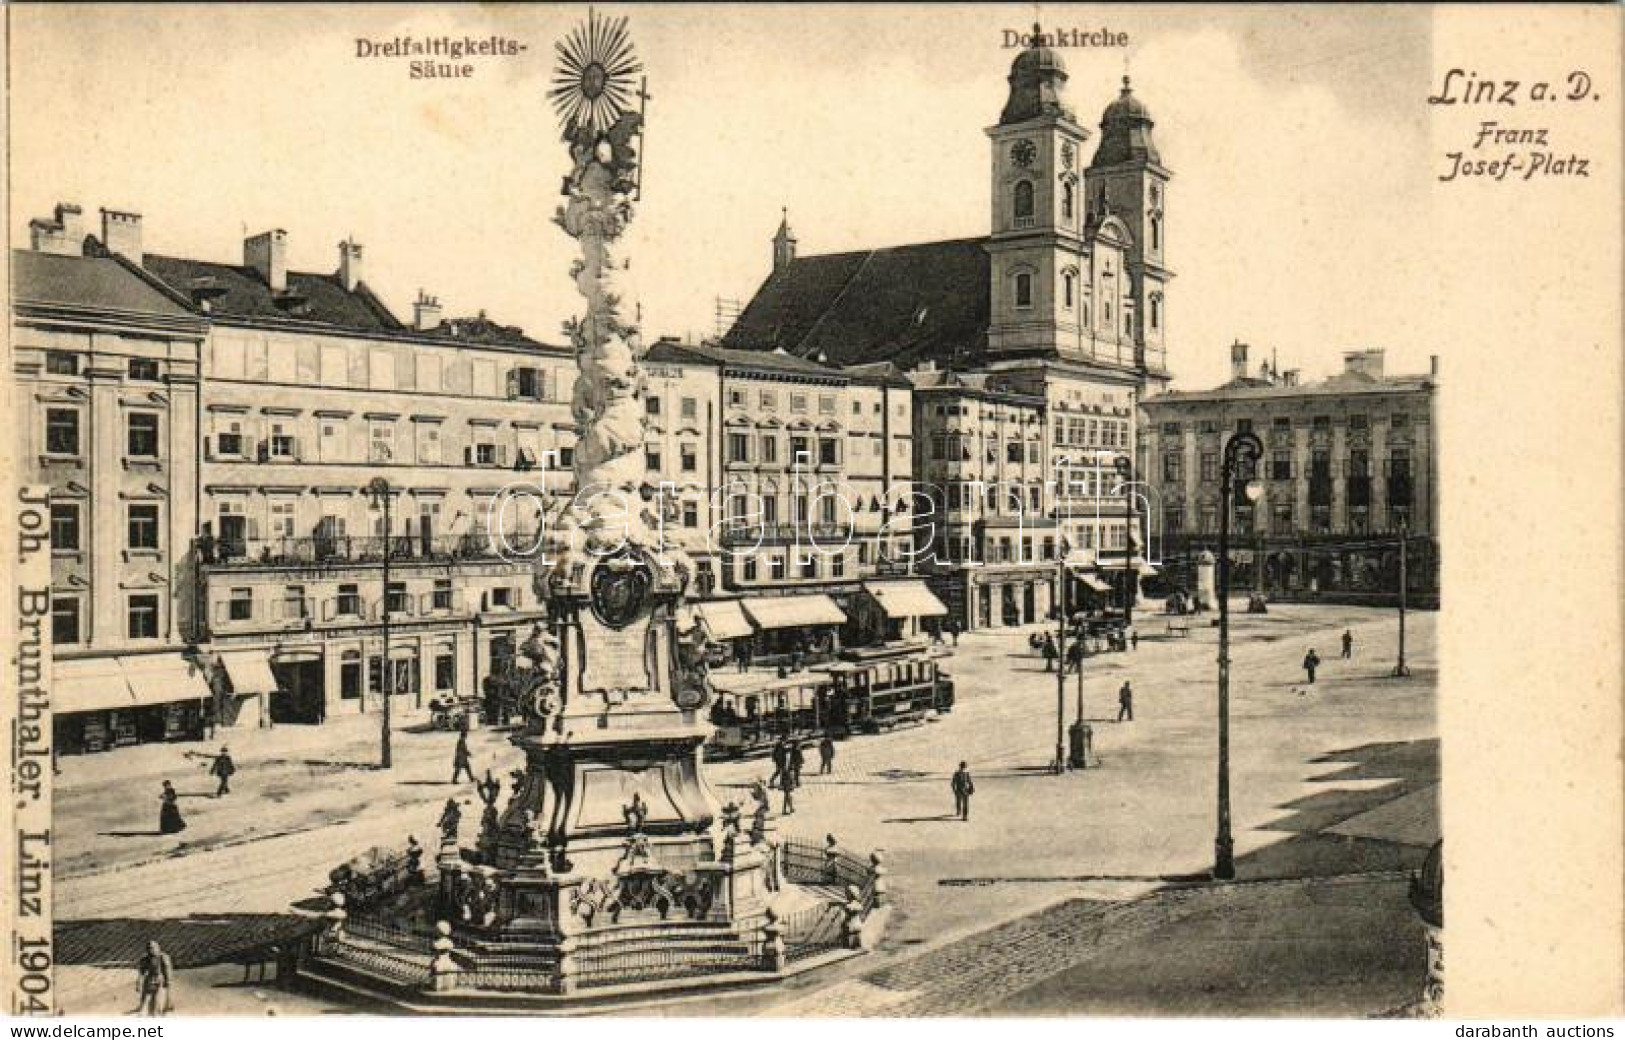 ** T2 Linz, Franz Josef-Platz, Dreifaltigkeits-Säule, Domkirche / Square, Holy Trinity Statue, Church, Tram, Shops / Fer - Zonder Classificatie